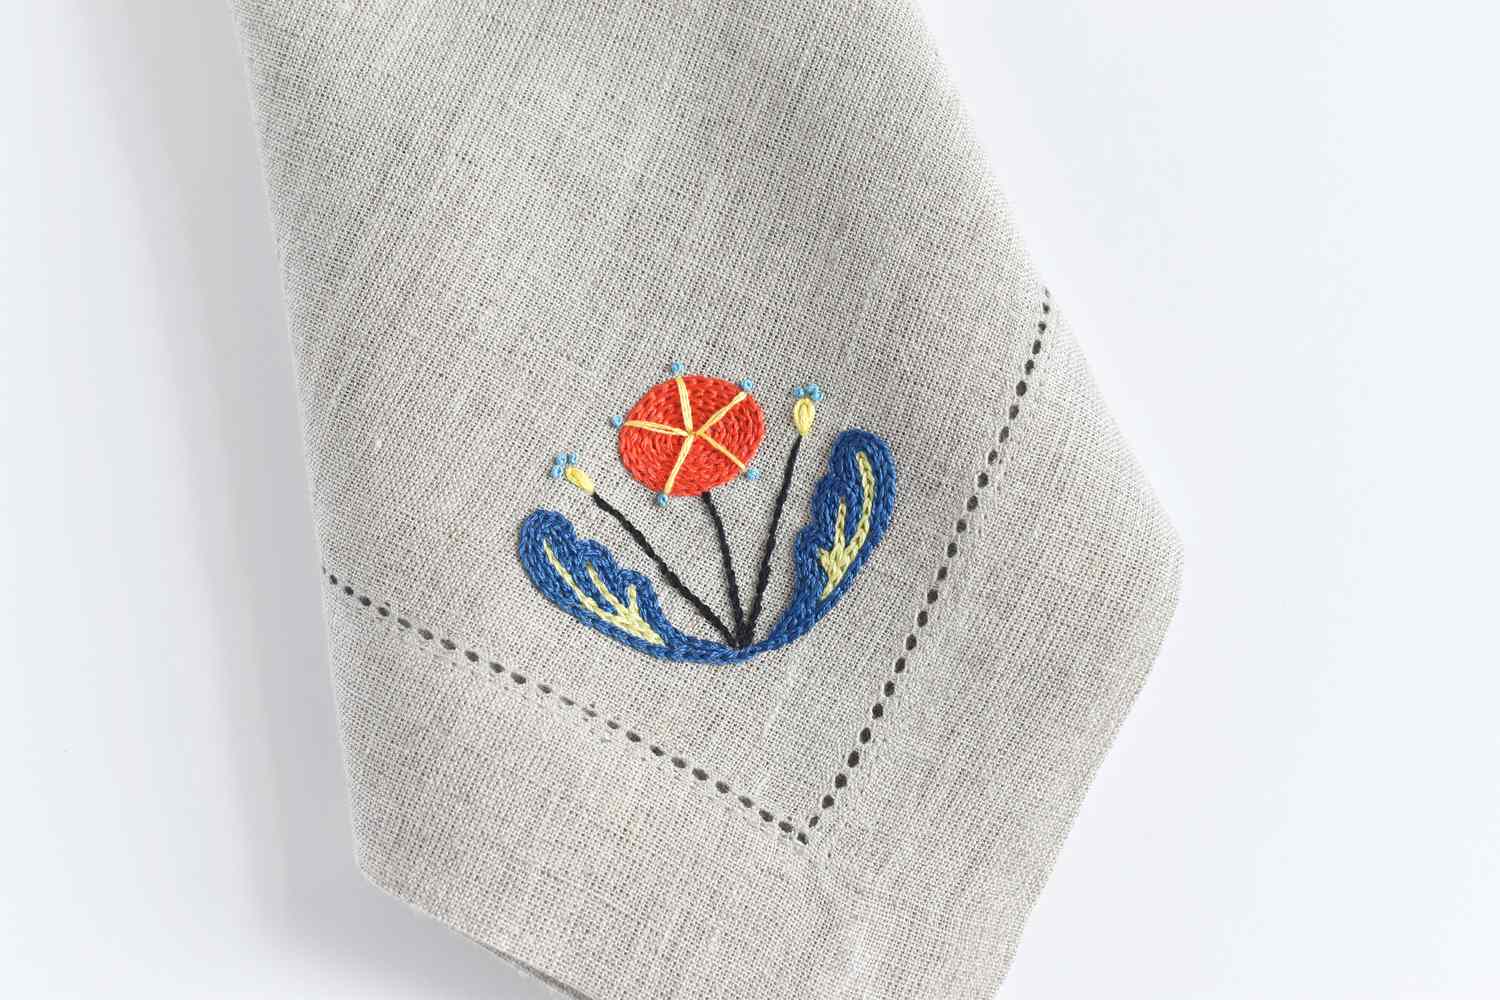 Scandinavian flower embroidered onto a napkin